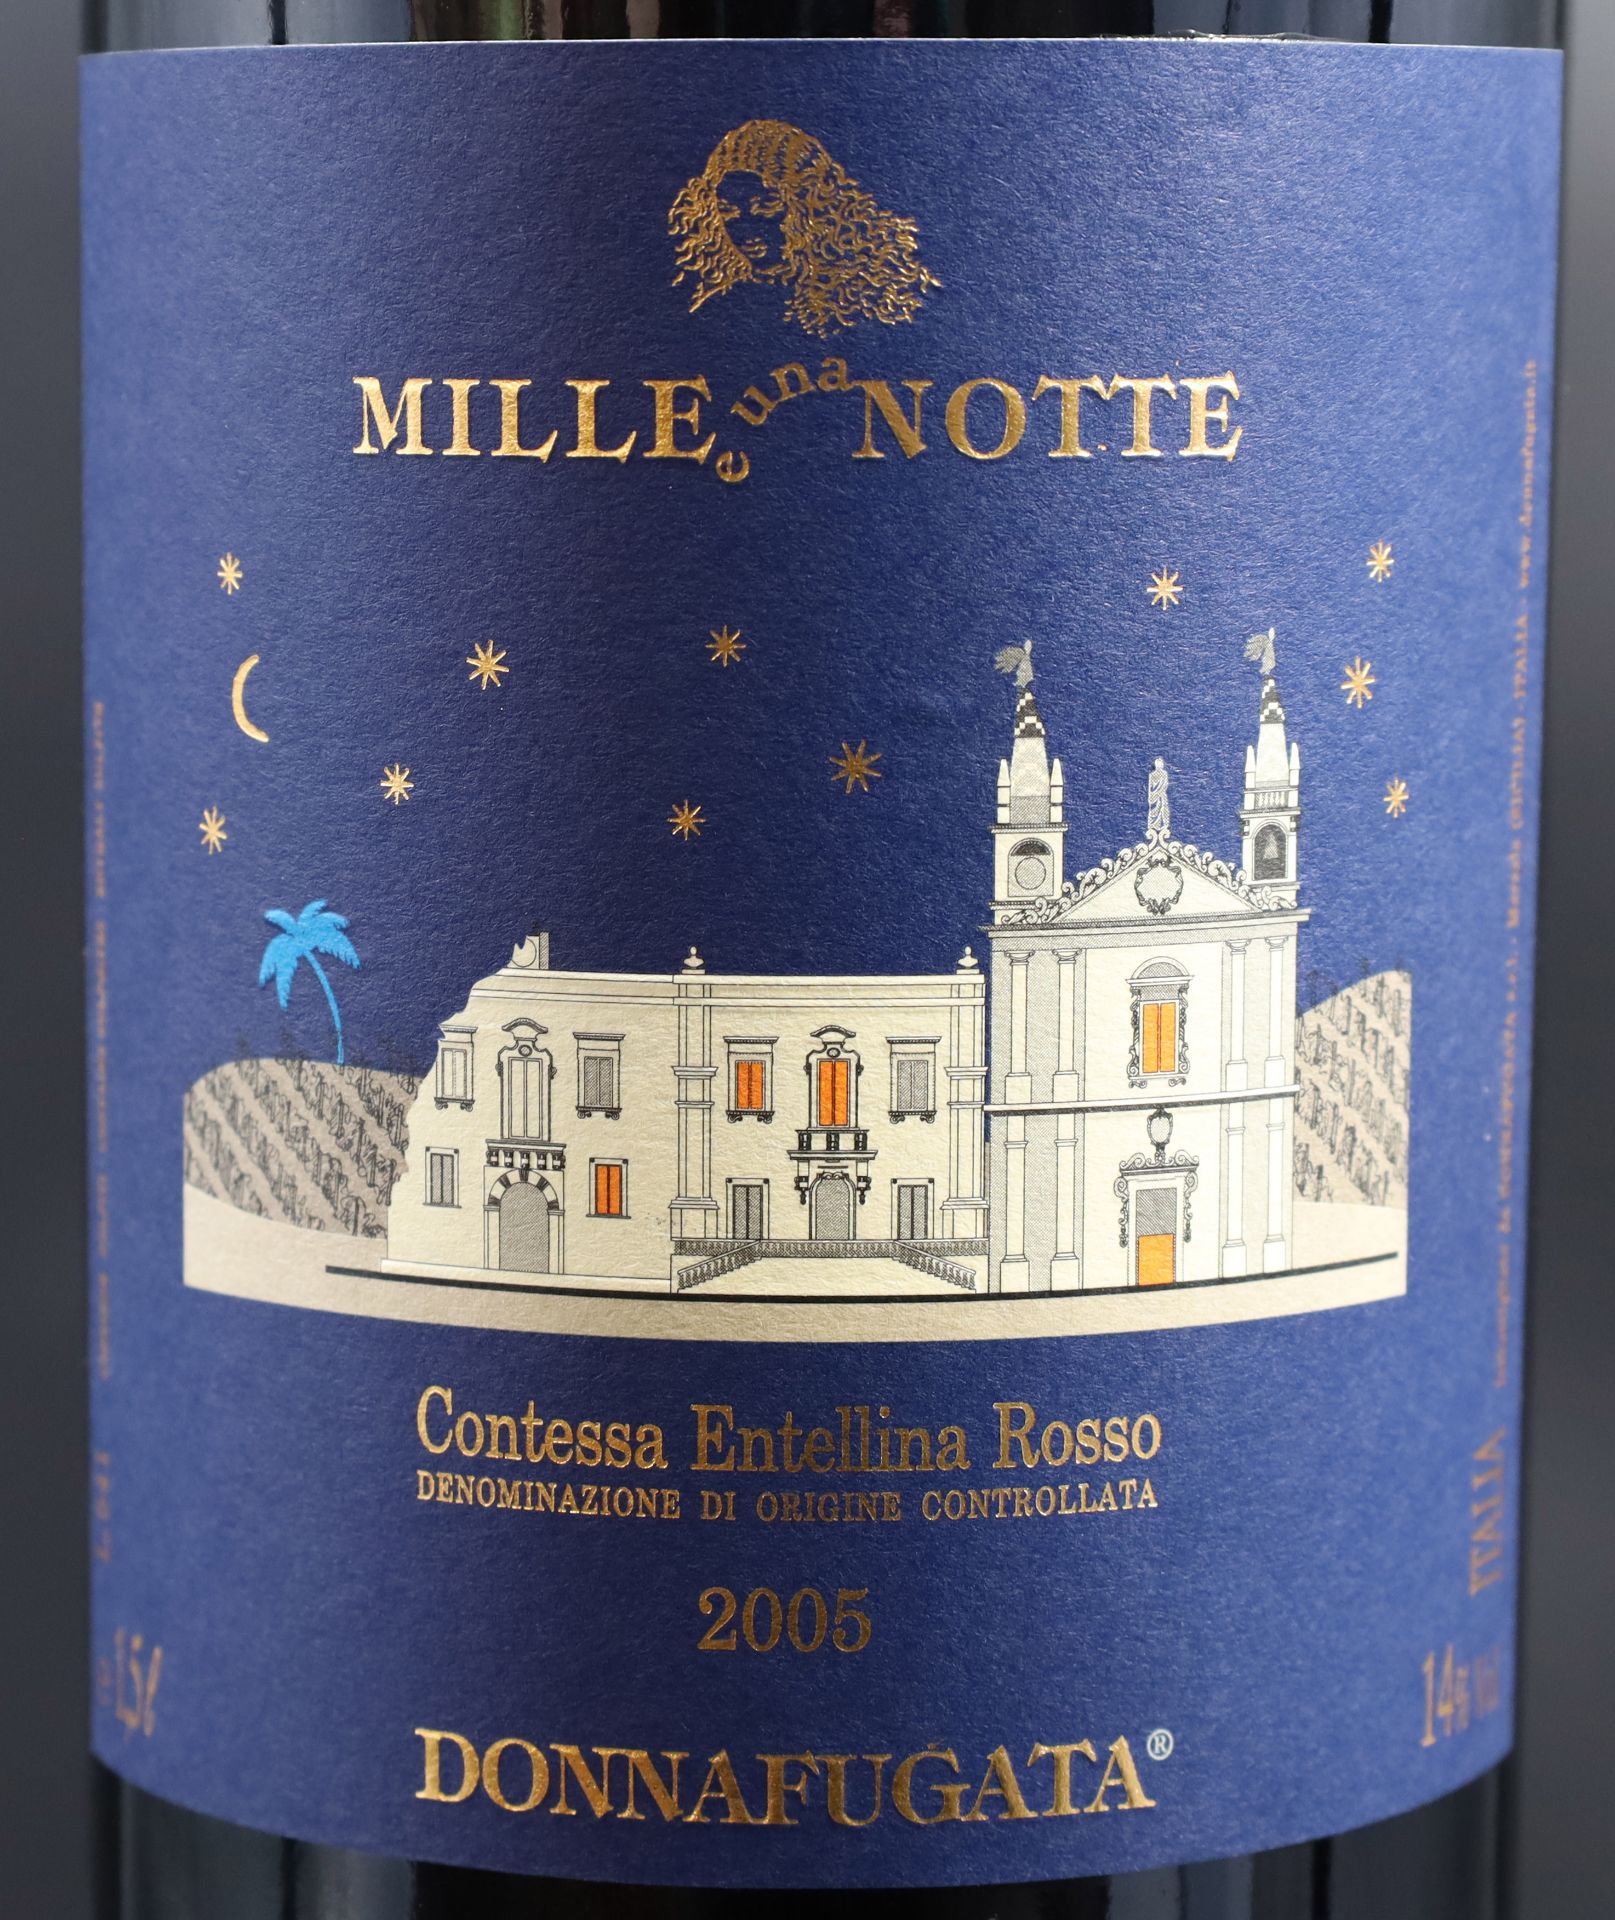 1 bottle of red wine. DONNAFUGATA. Mille e una Notte. Magnum. 2005. Italy. - Image 3 of 5